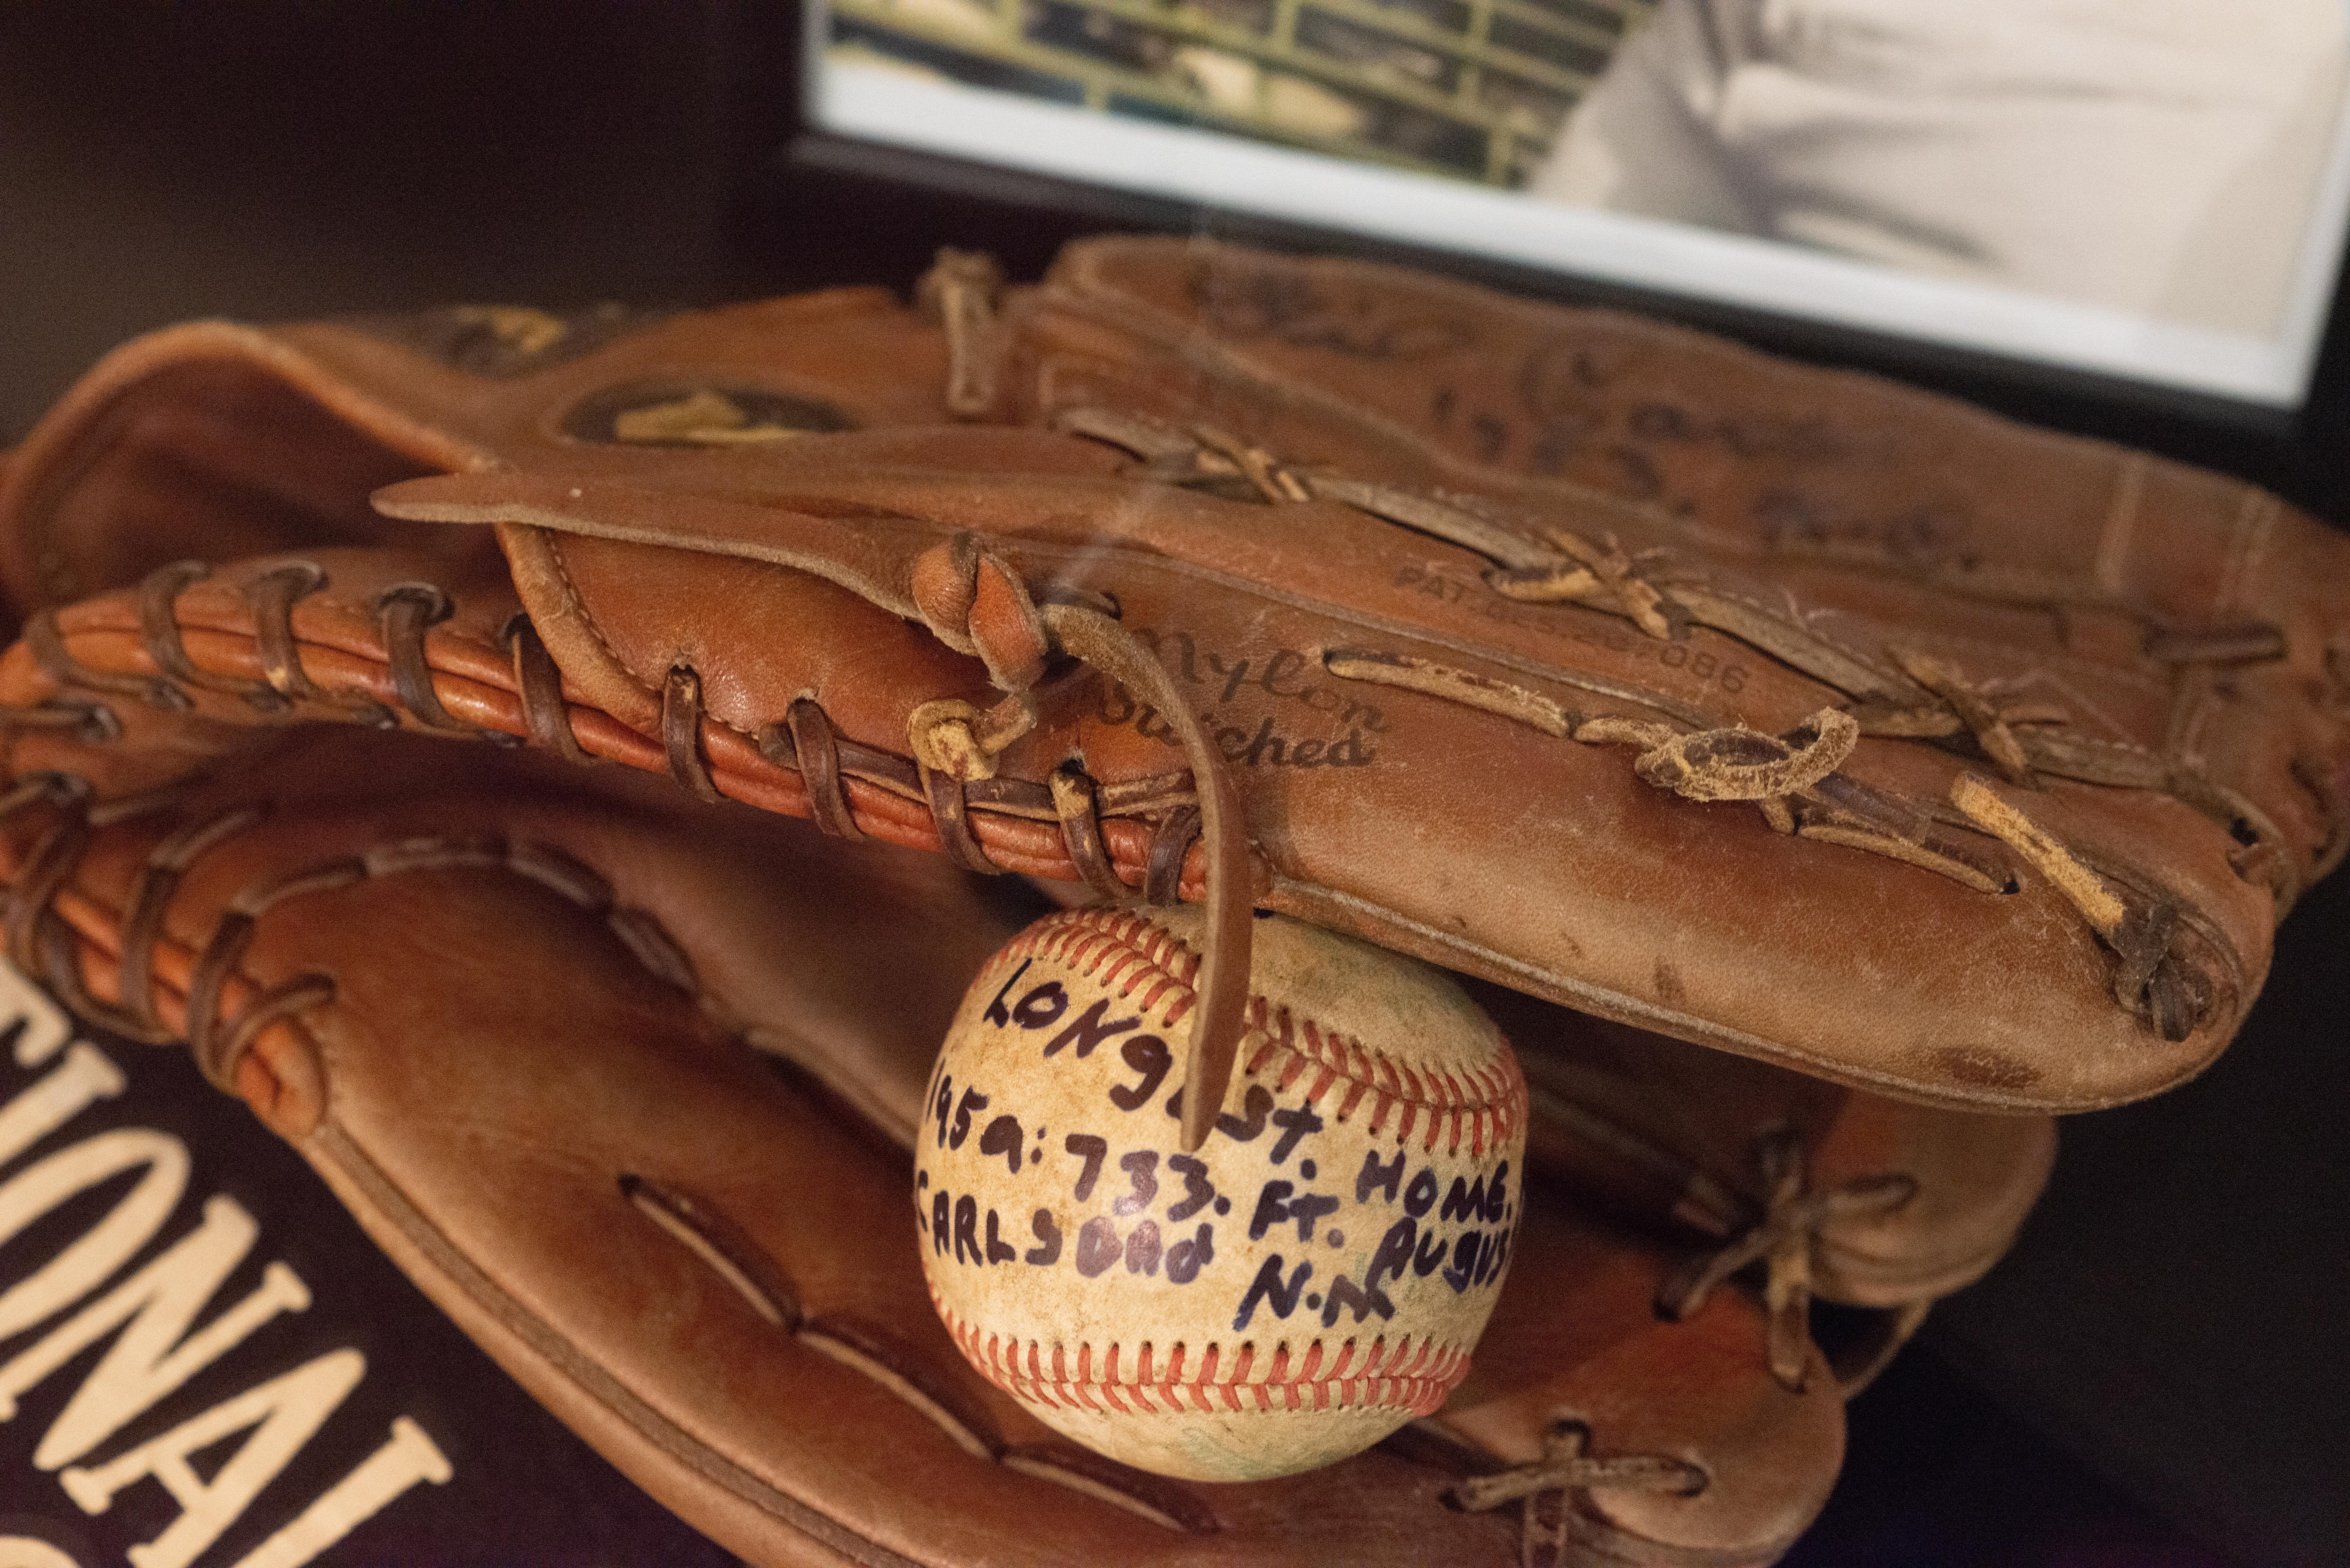 My Heart Belongs to the Monarchs - Negro Leagues Baseball Museum